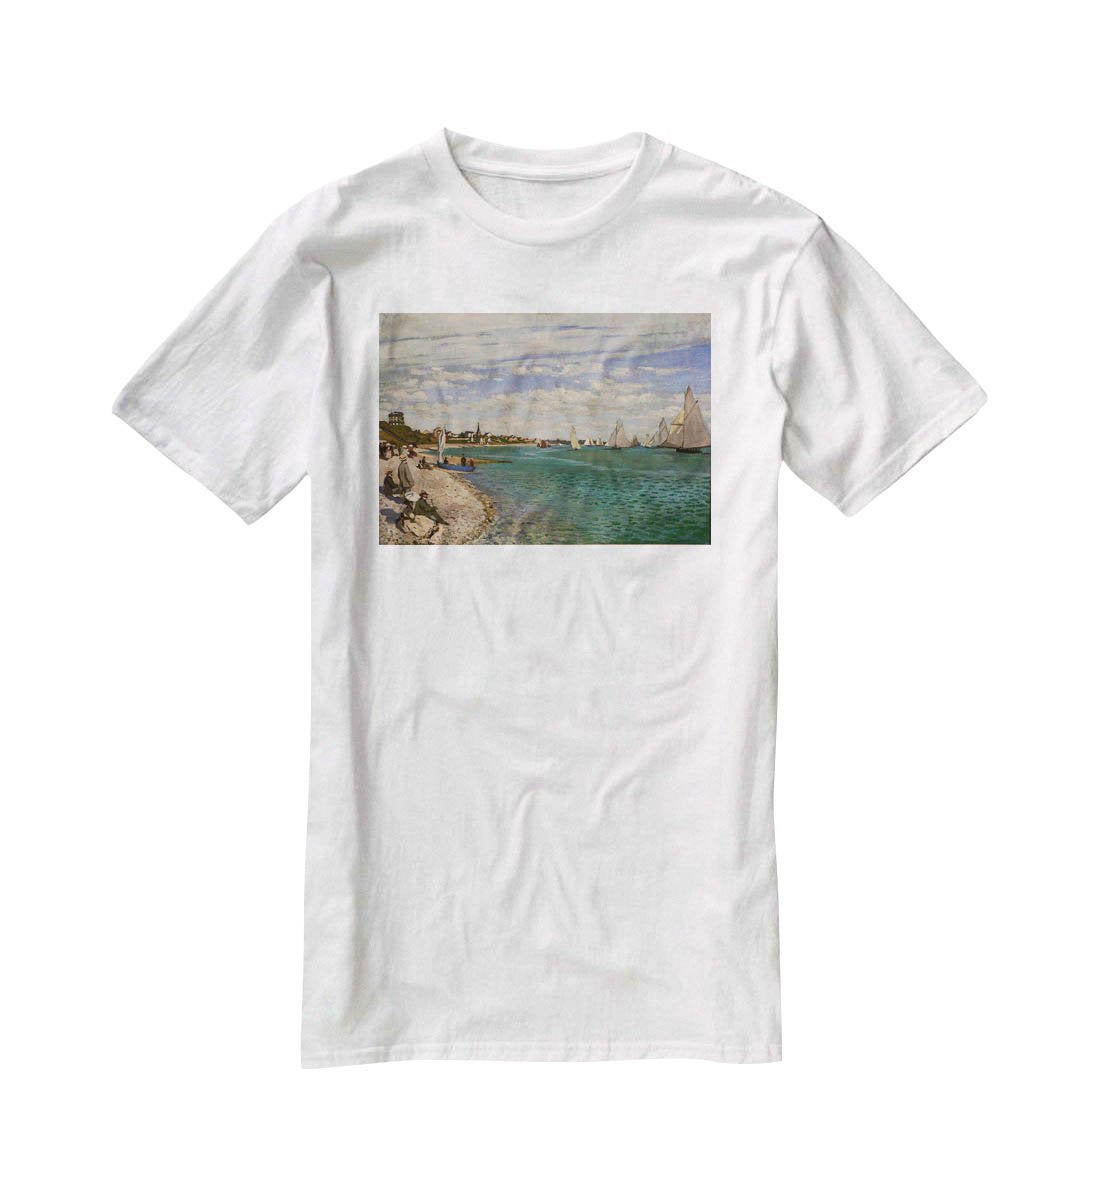 Regatta at St. Adresse by Monet T-Shirt - Canvas Art Rocks - 5